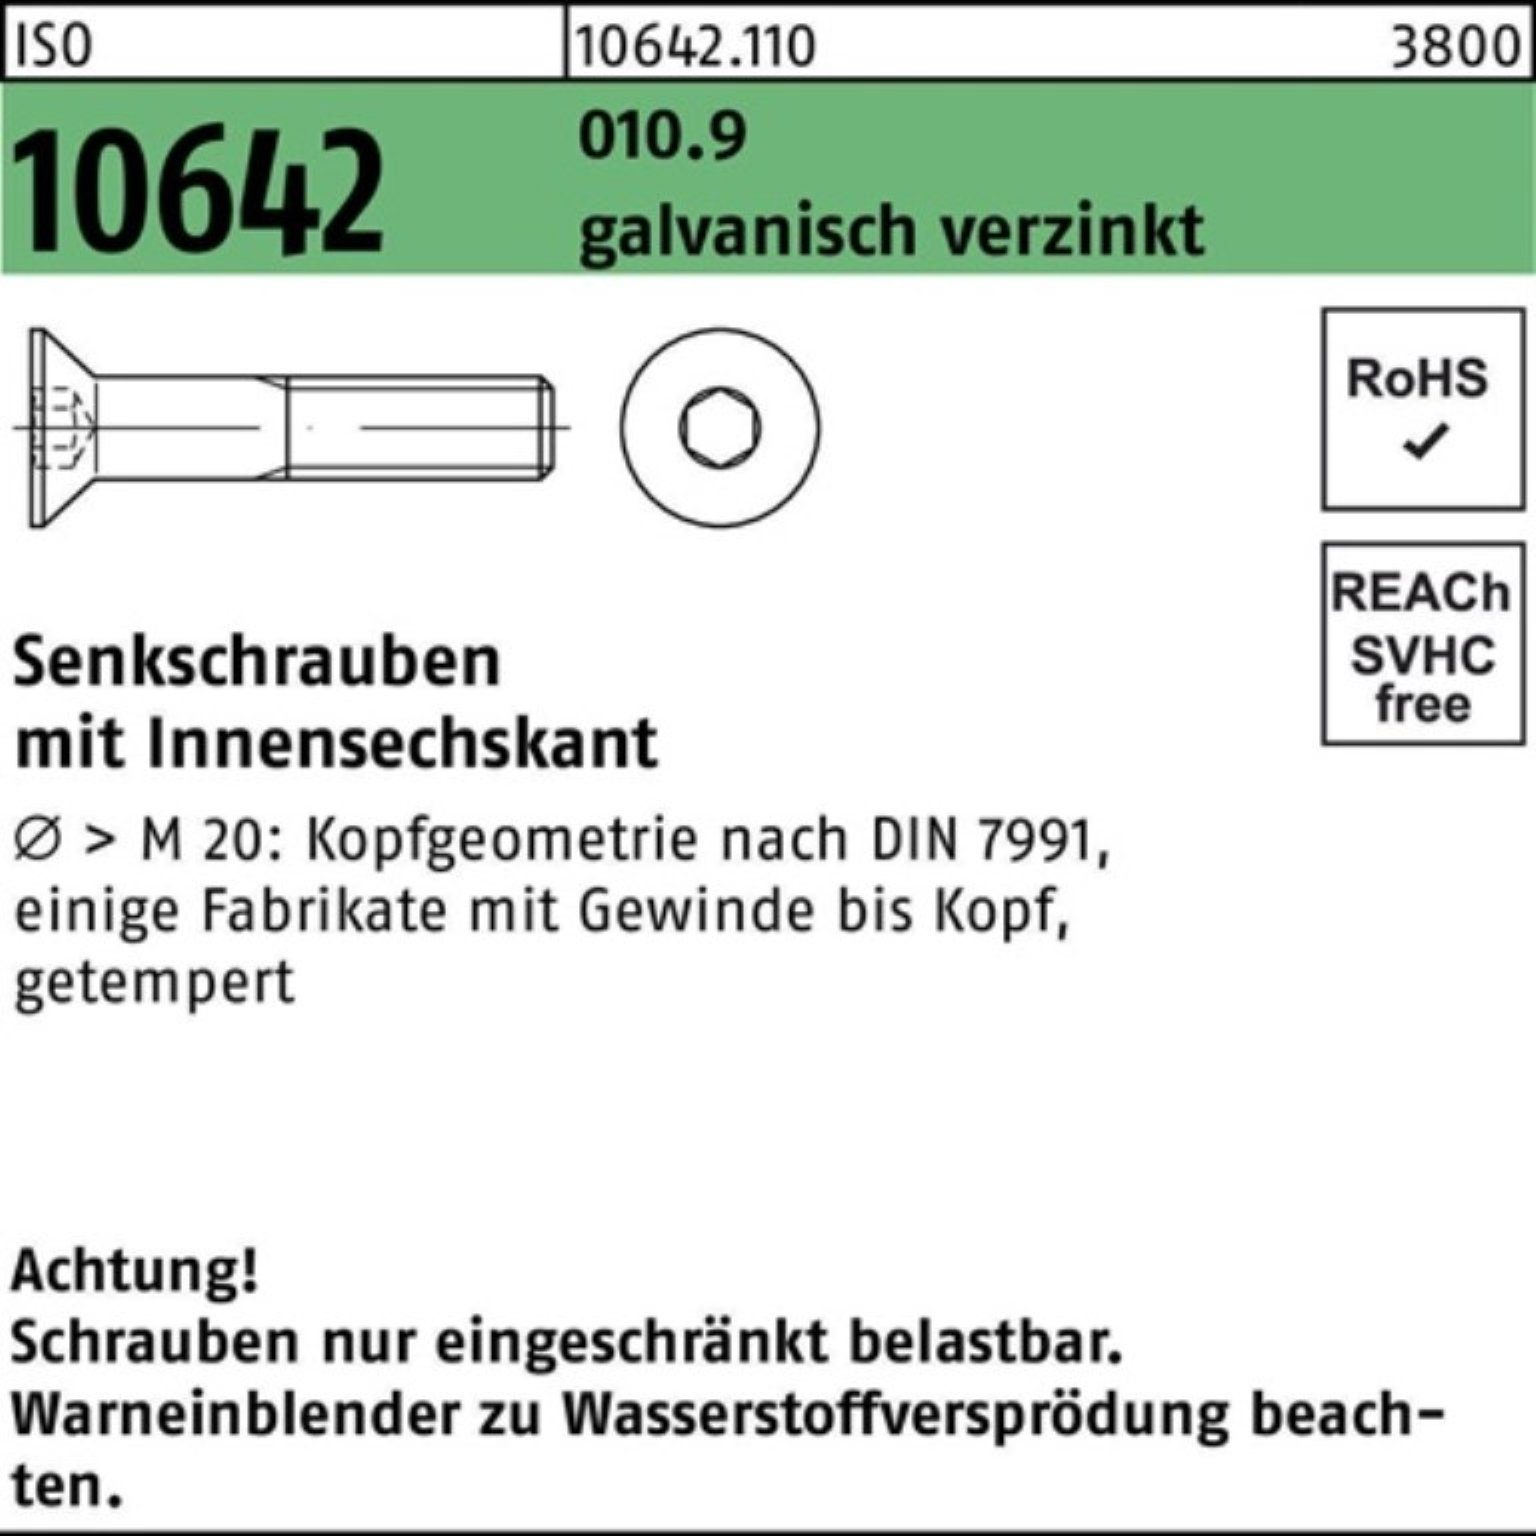 Reyher Senkschraube 500er Pack Senkschraube ISO 10642 Innen-6kt M4x 6 010.9 galv.verz. 500